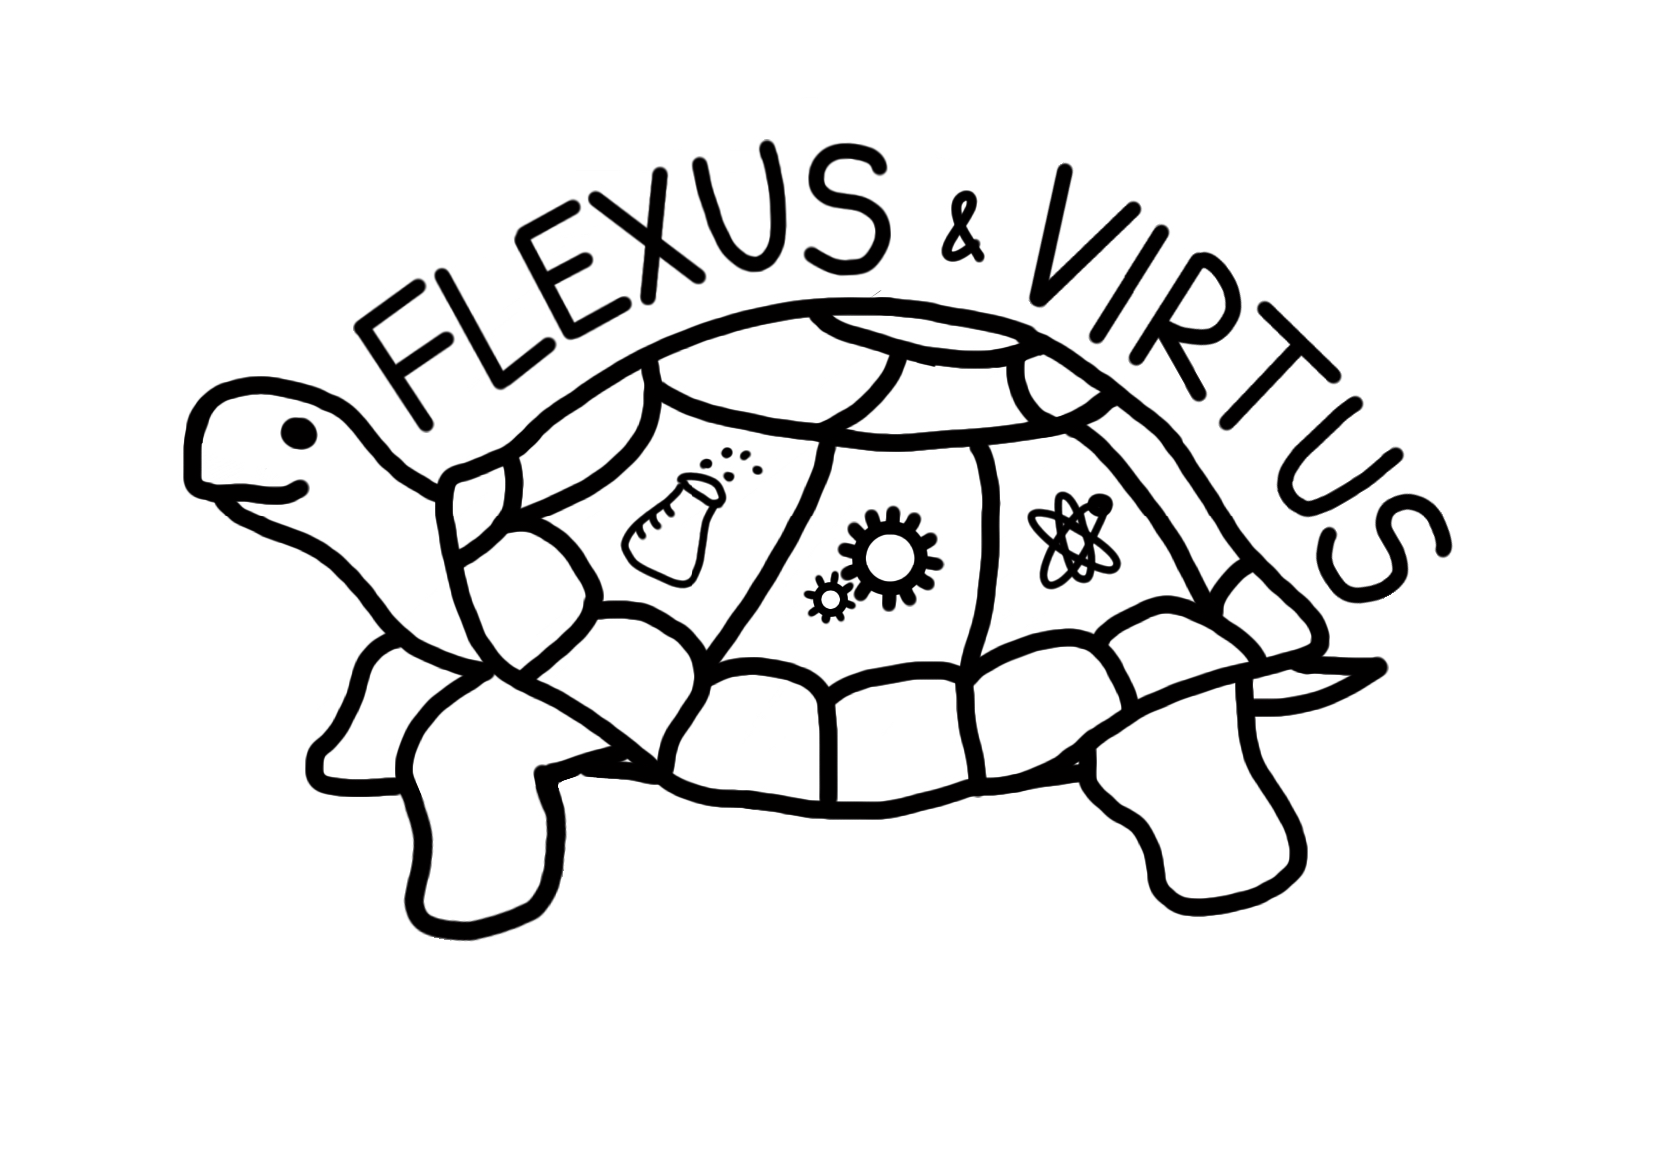 flexus logo